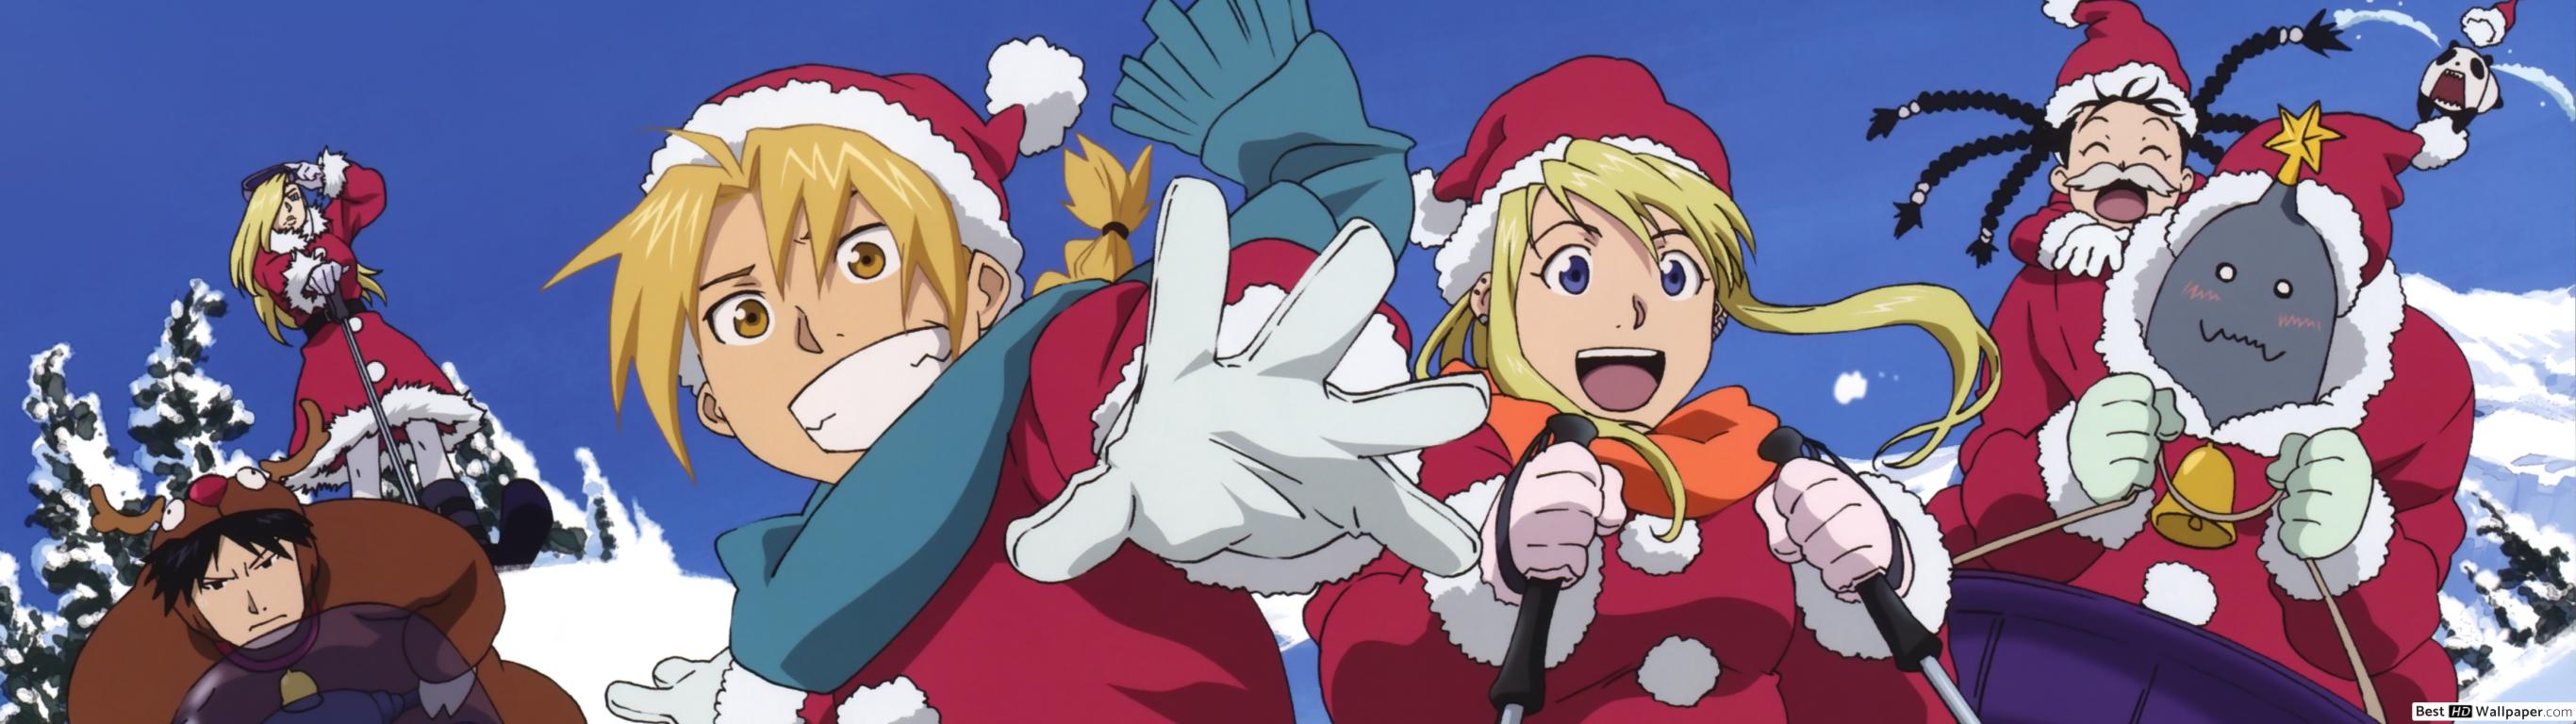 Fullmetal Alchemist Christmas